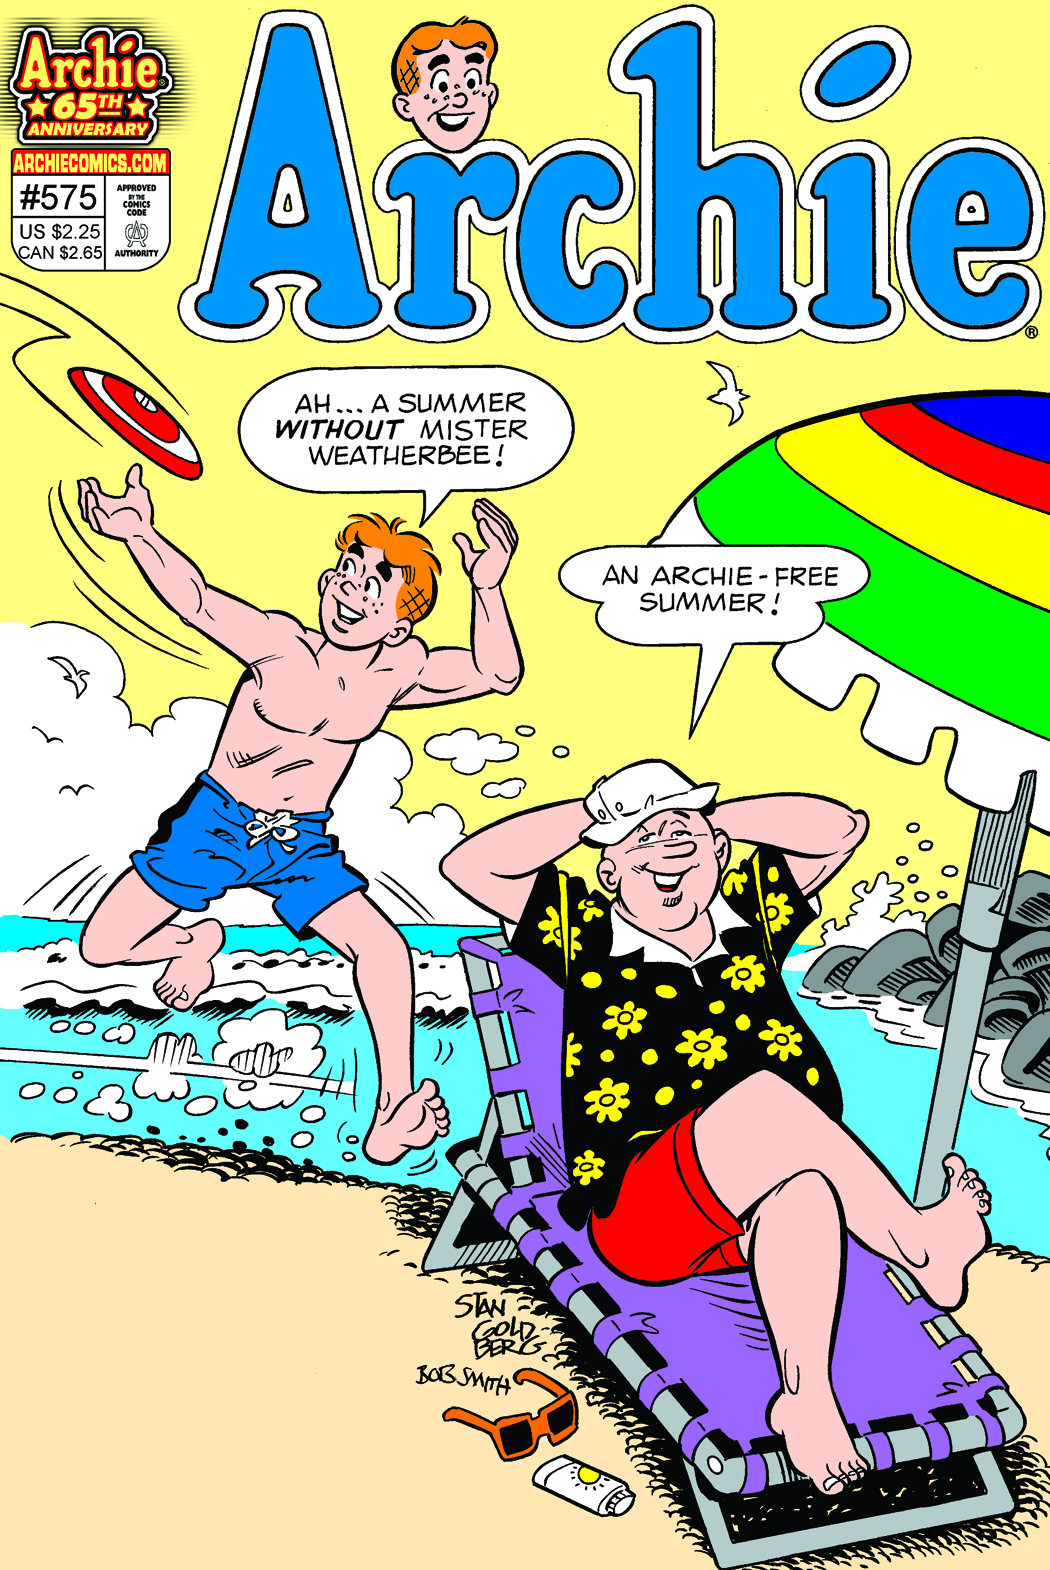 Archie mr weatherbee